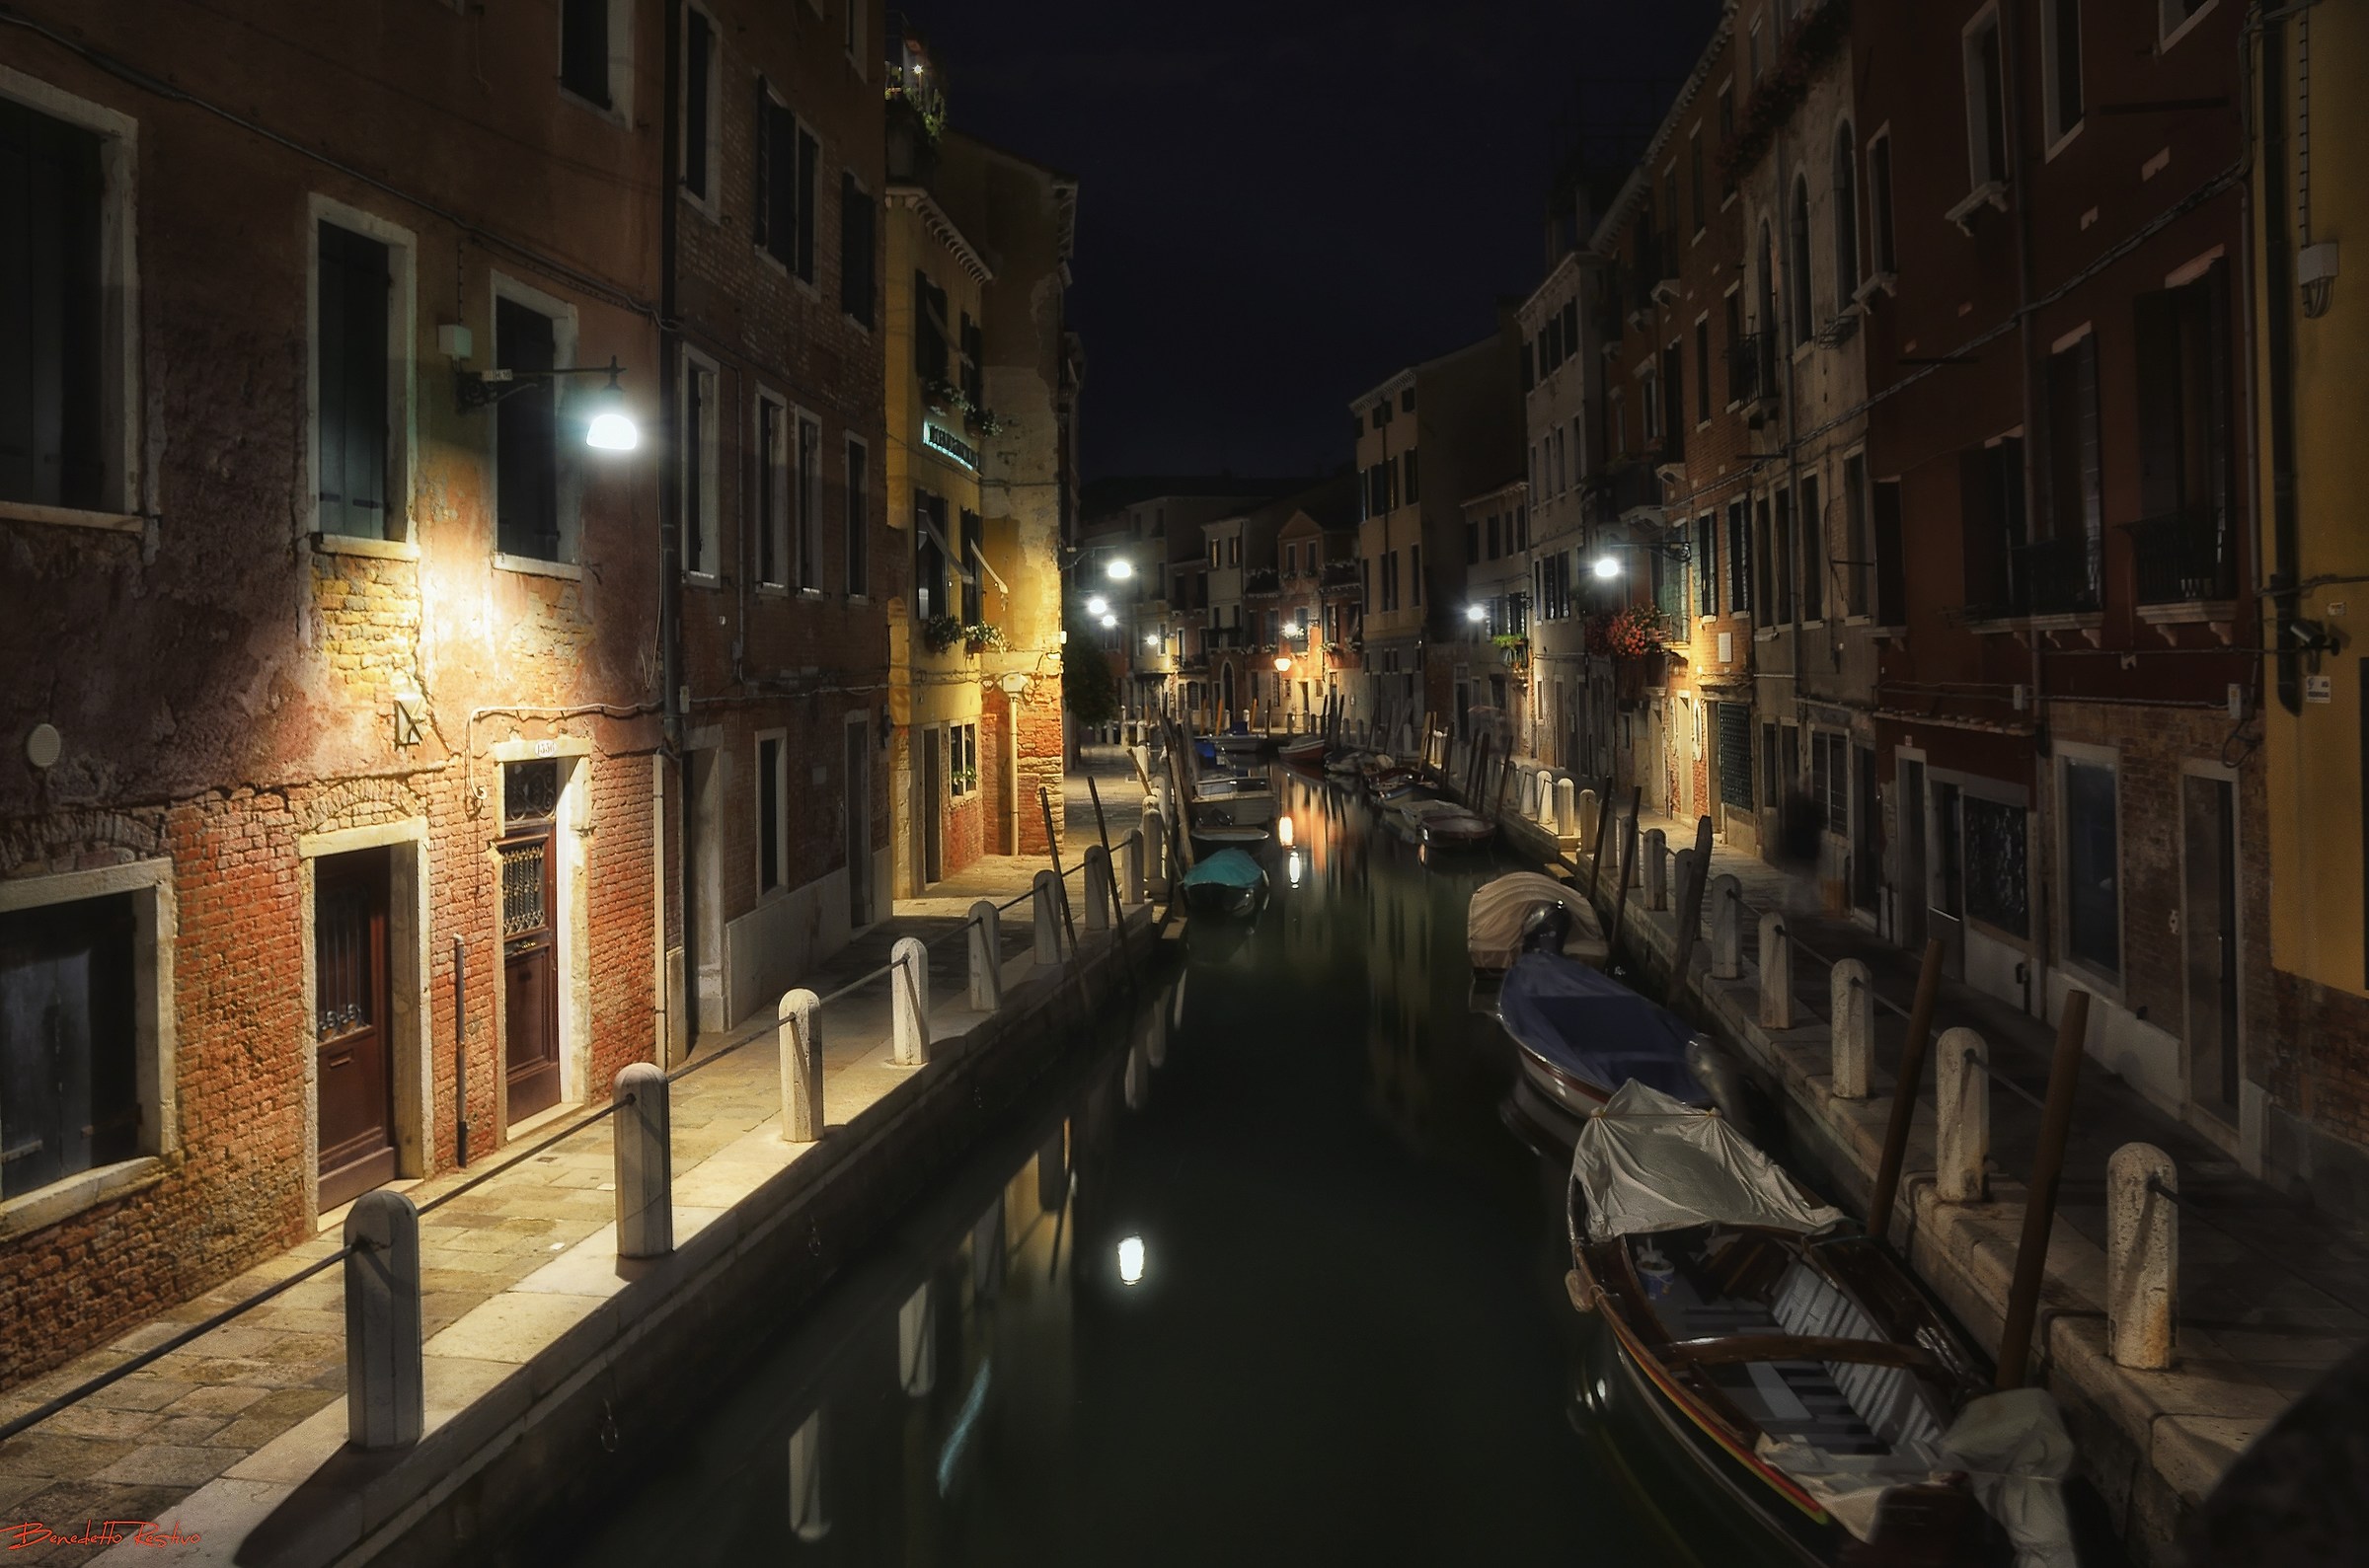 From the Venetian night ........